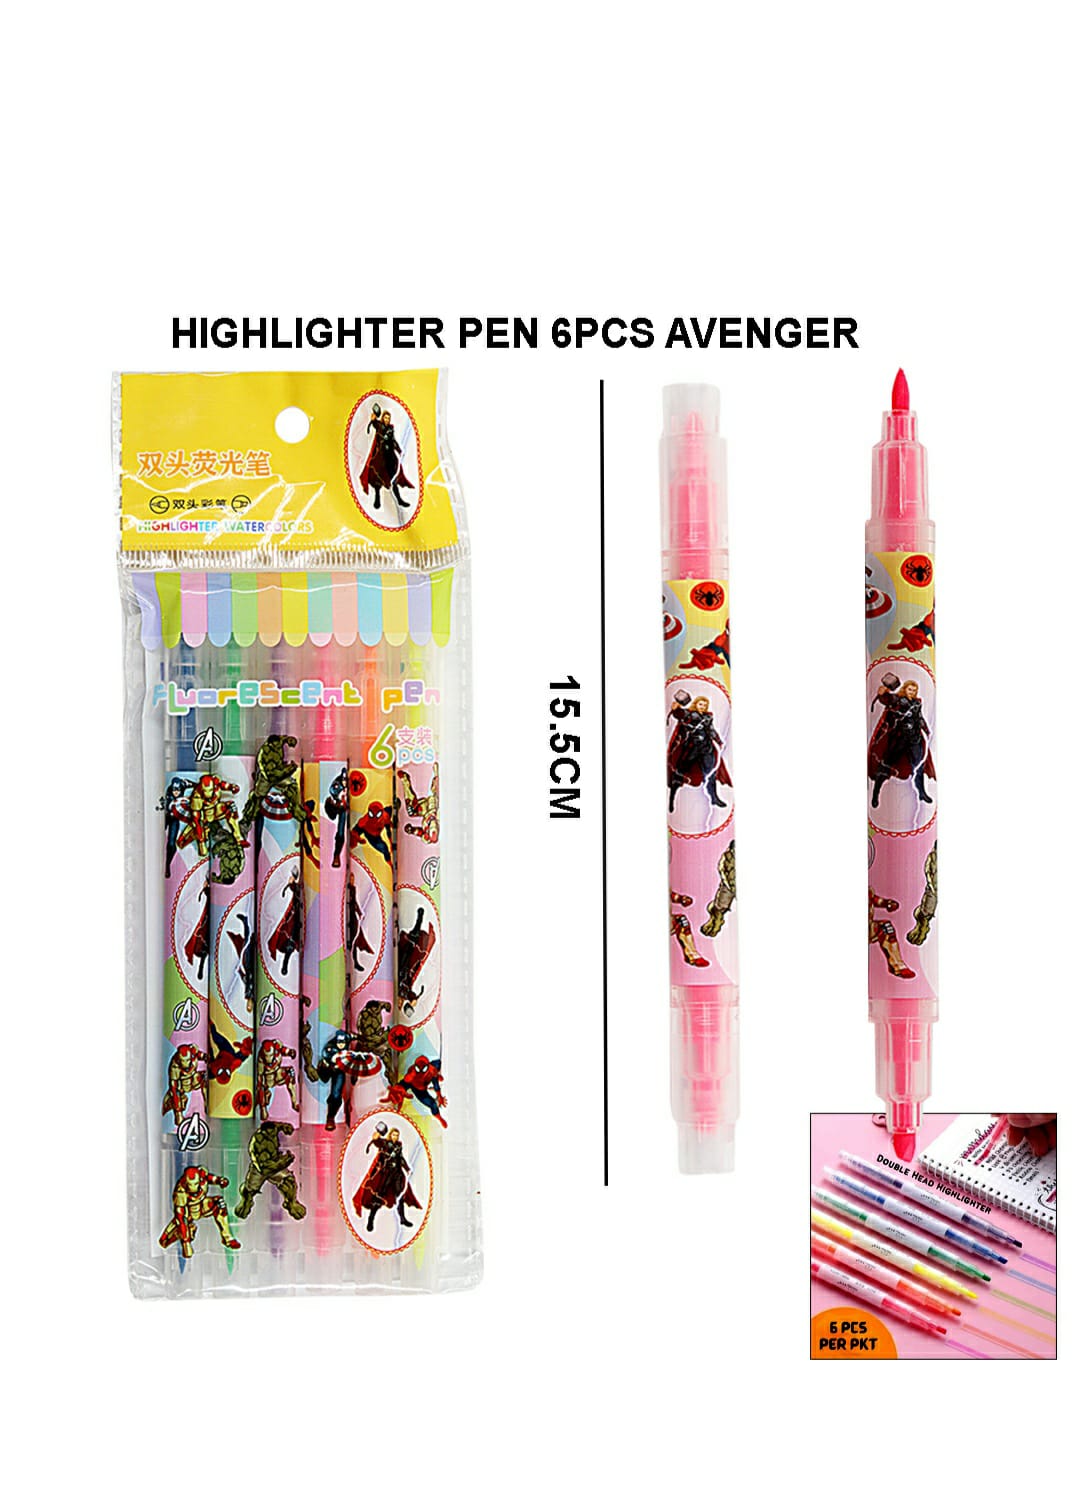 Highlighter Pen 6Pcs Avenger Qbt2778-3 | INKARTO